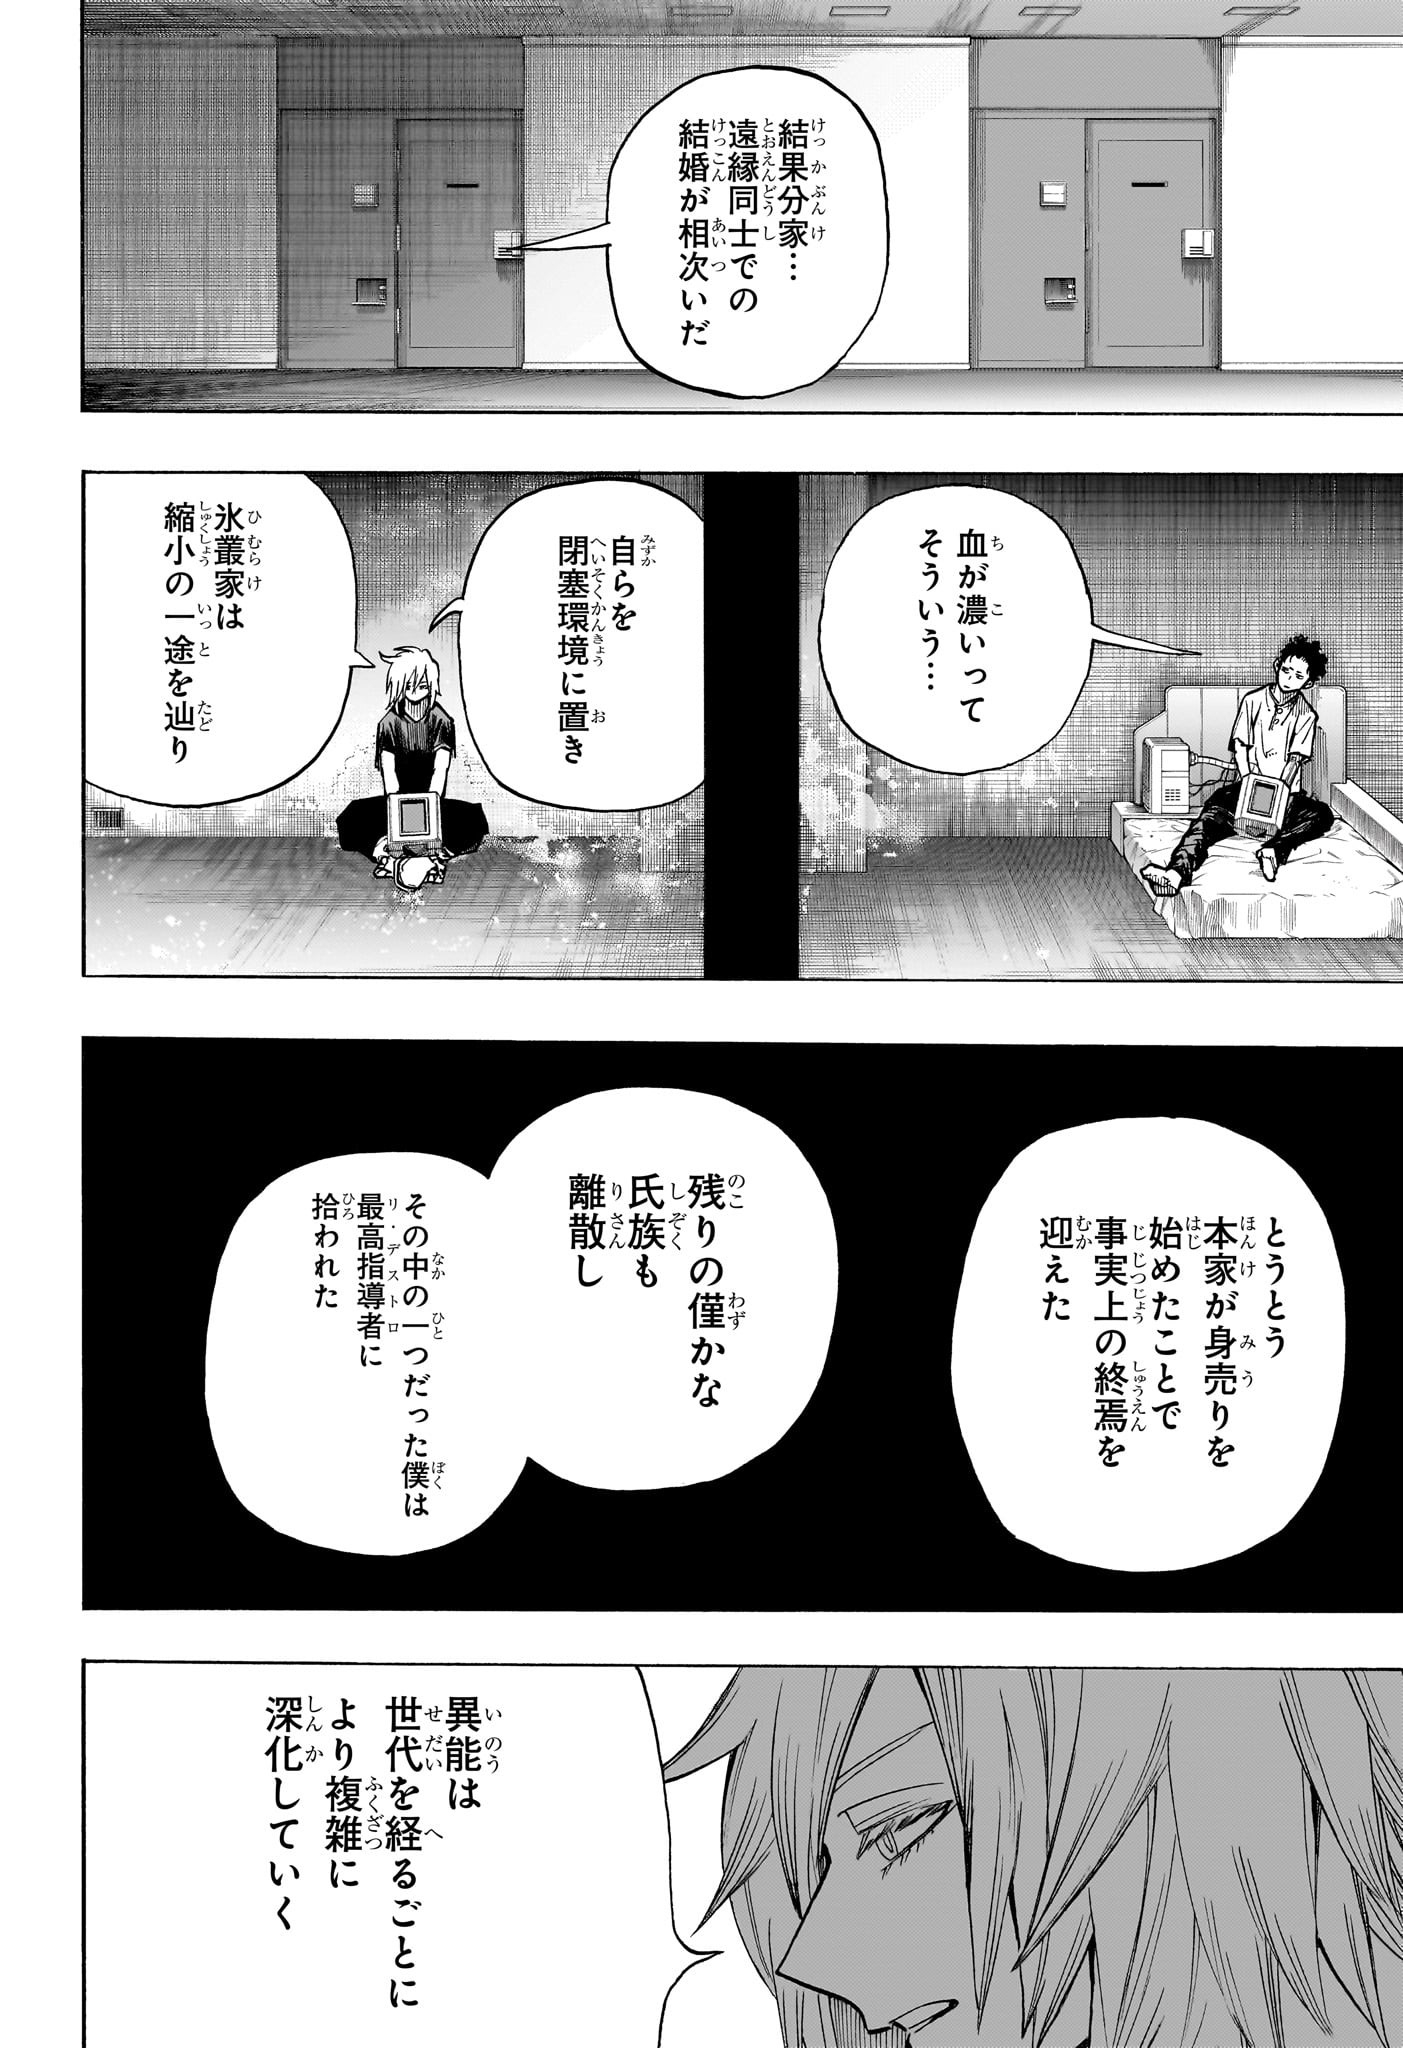 Boku no Hero Academia - Chapter 387 - Page 2